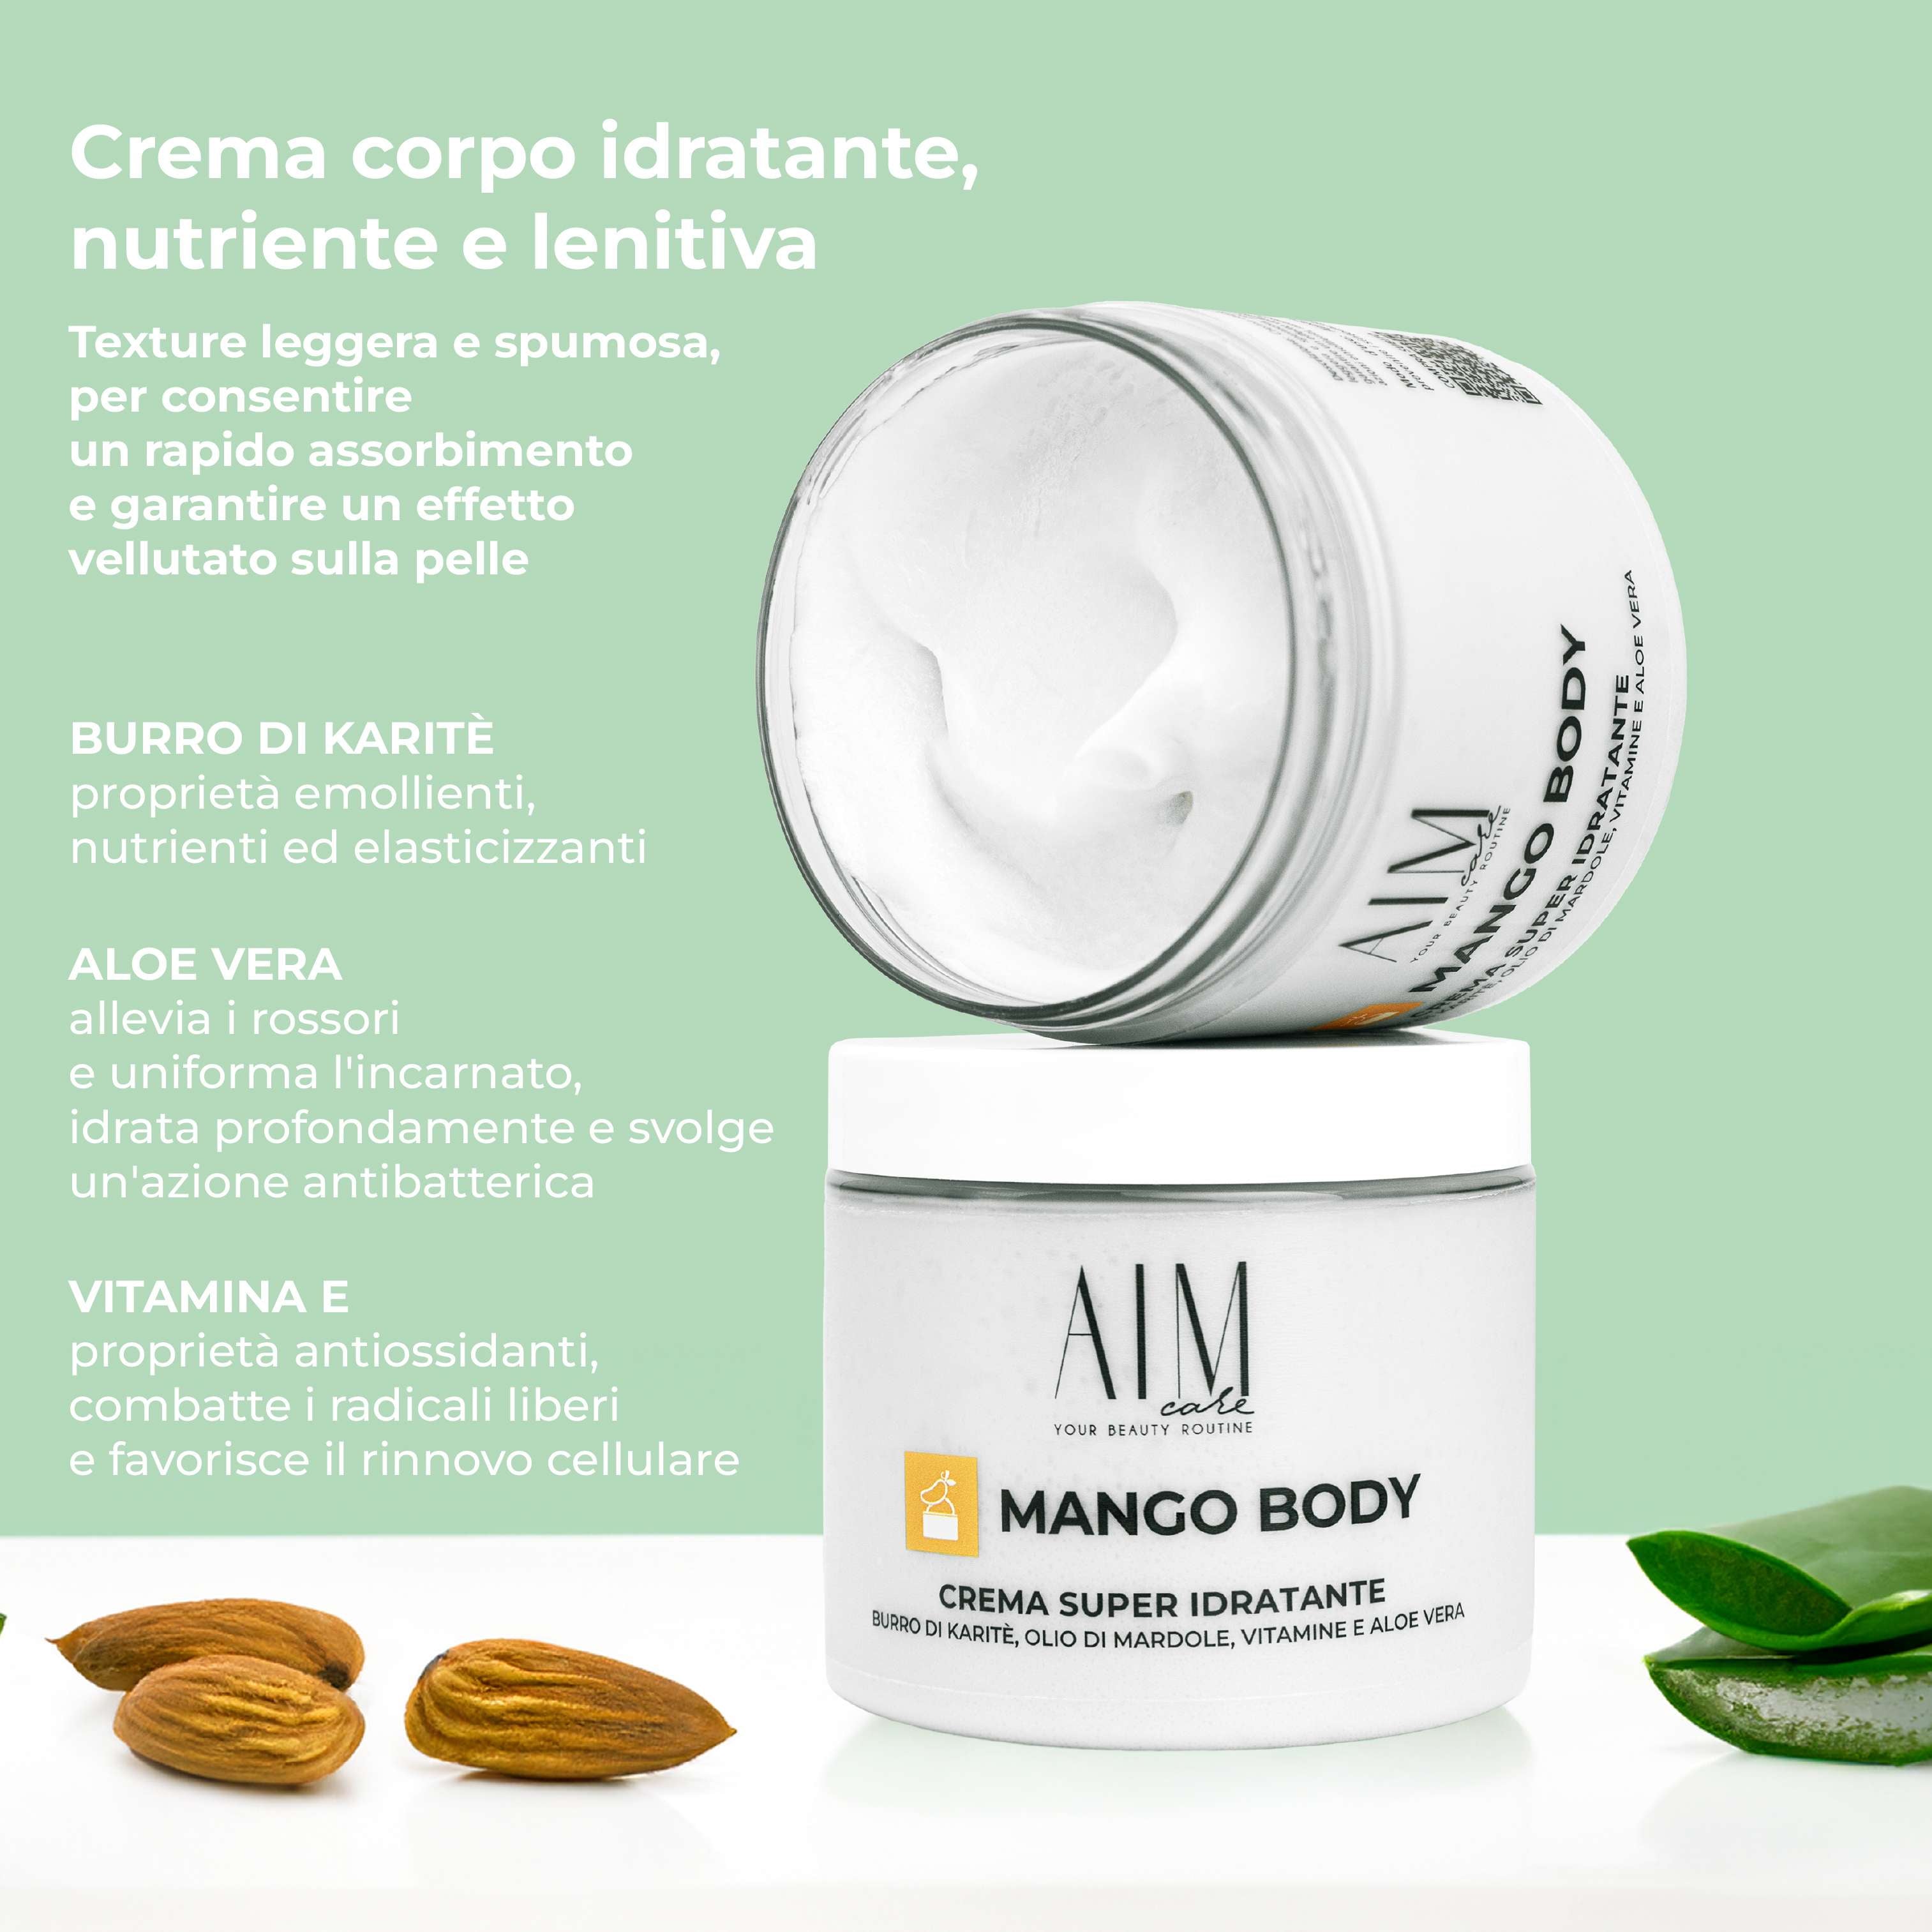 Mango body - body moisturizing cream